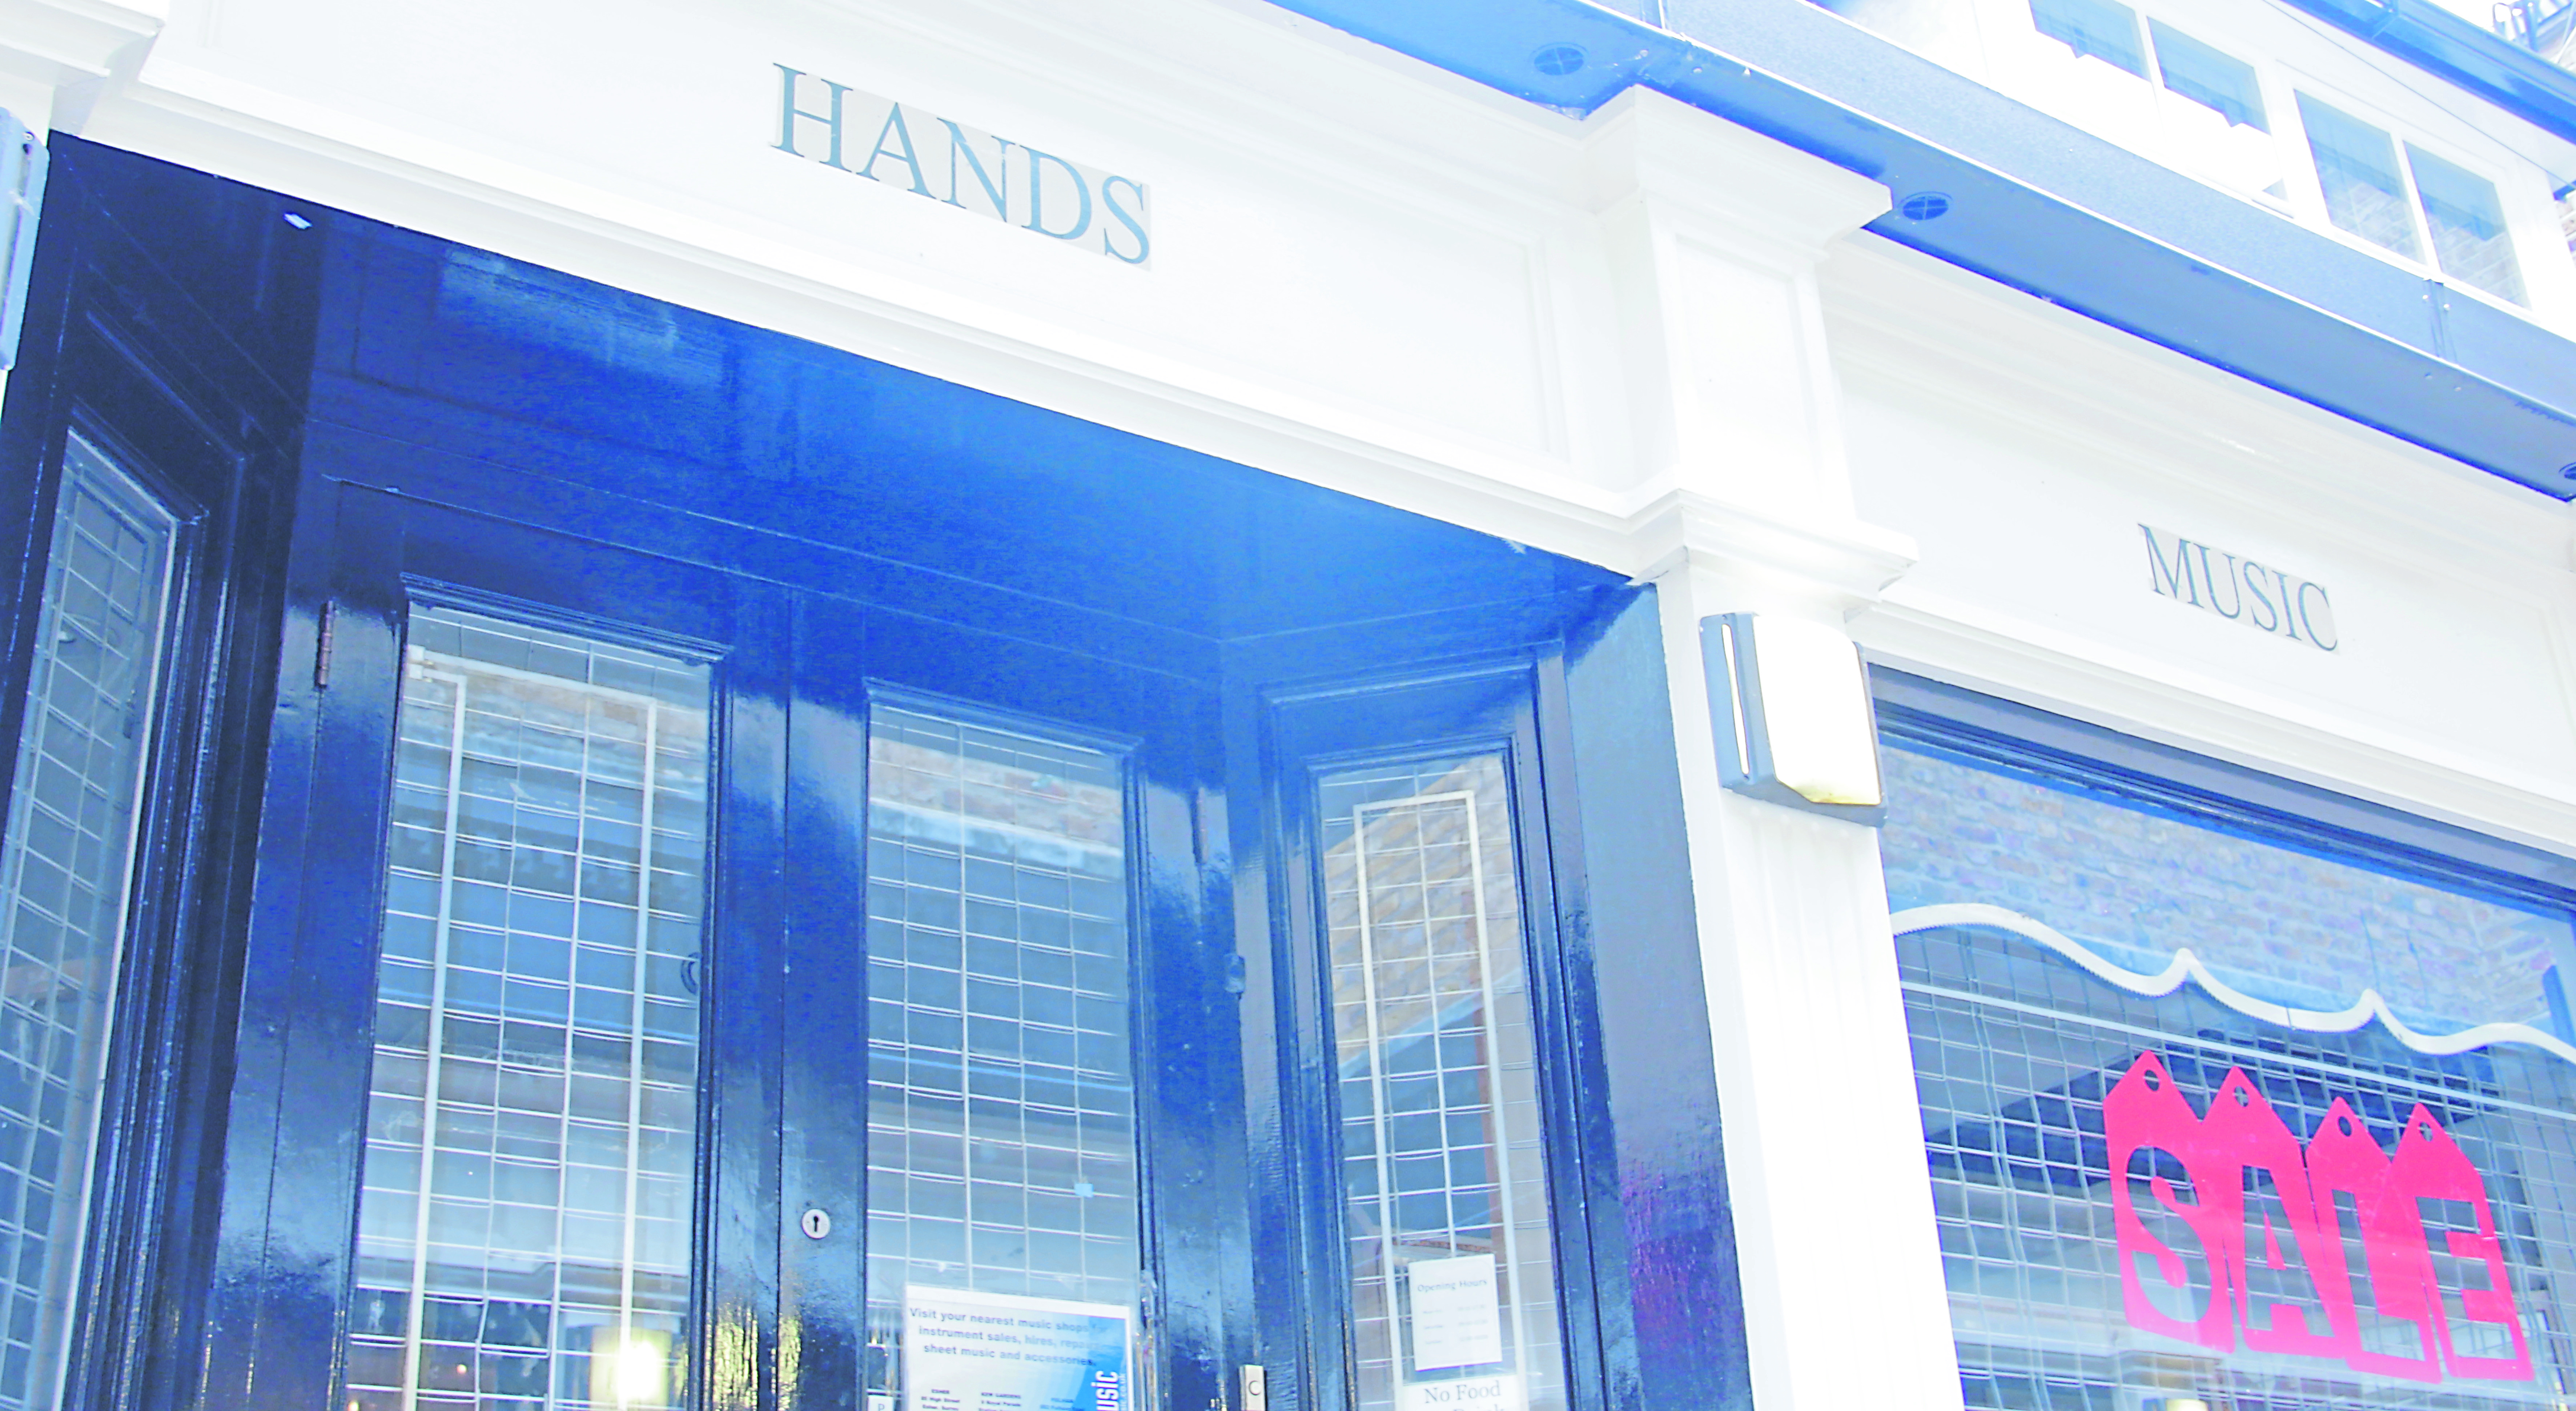 Sadness over Hands Music shop closure